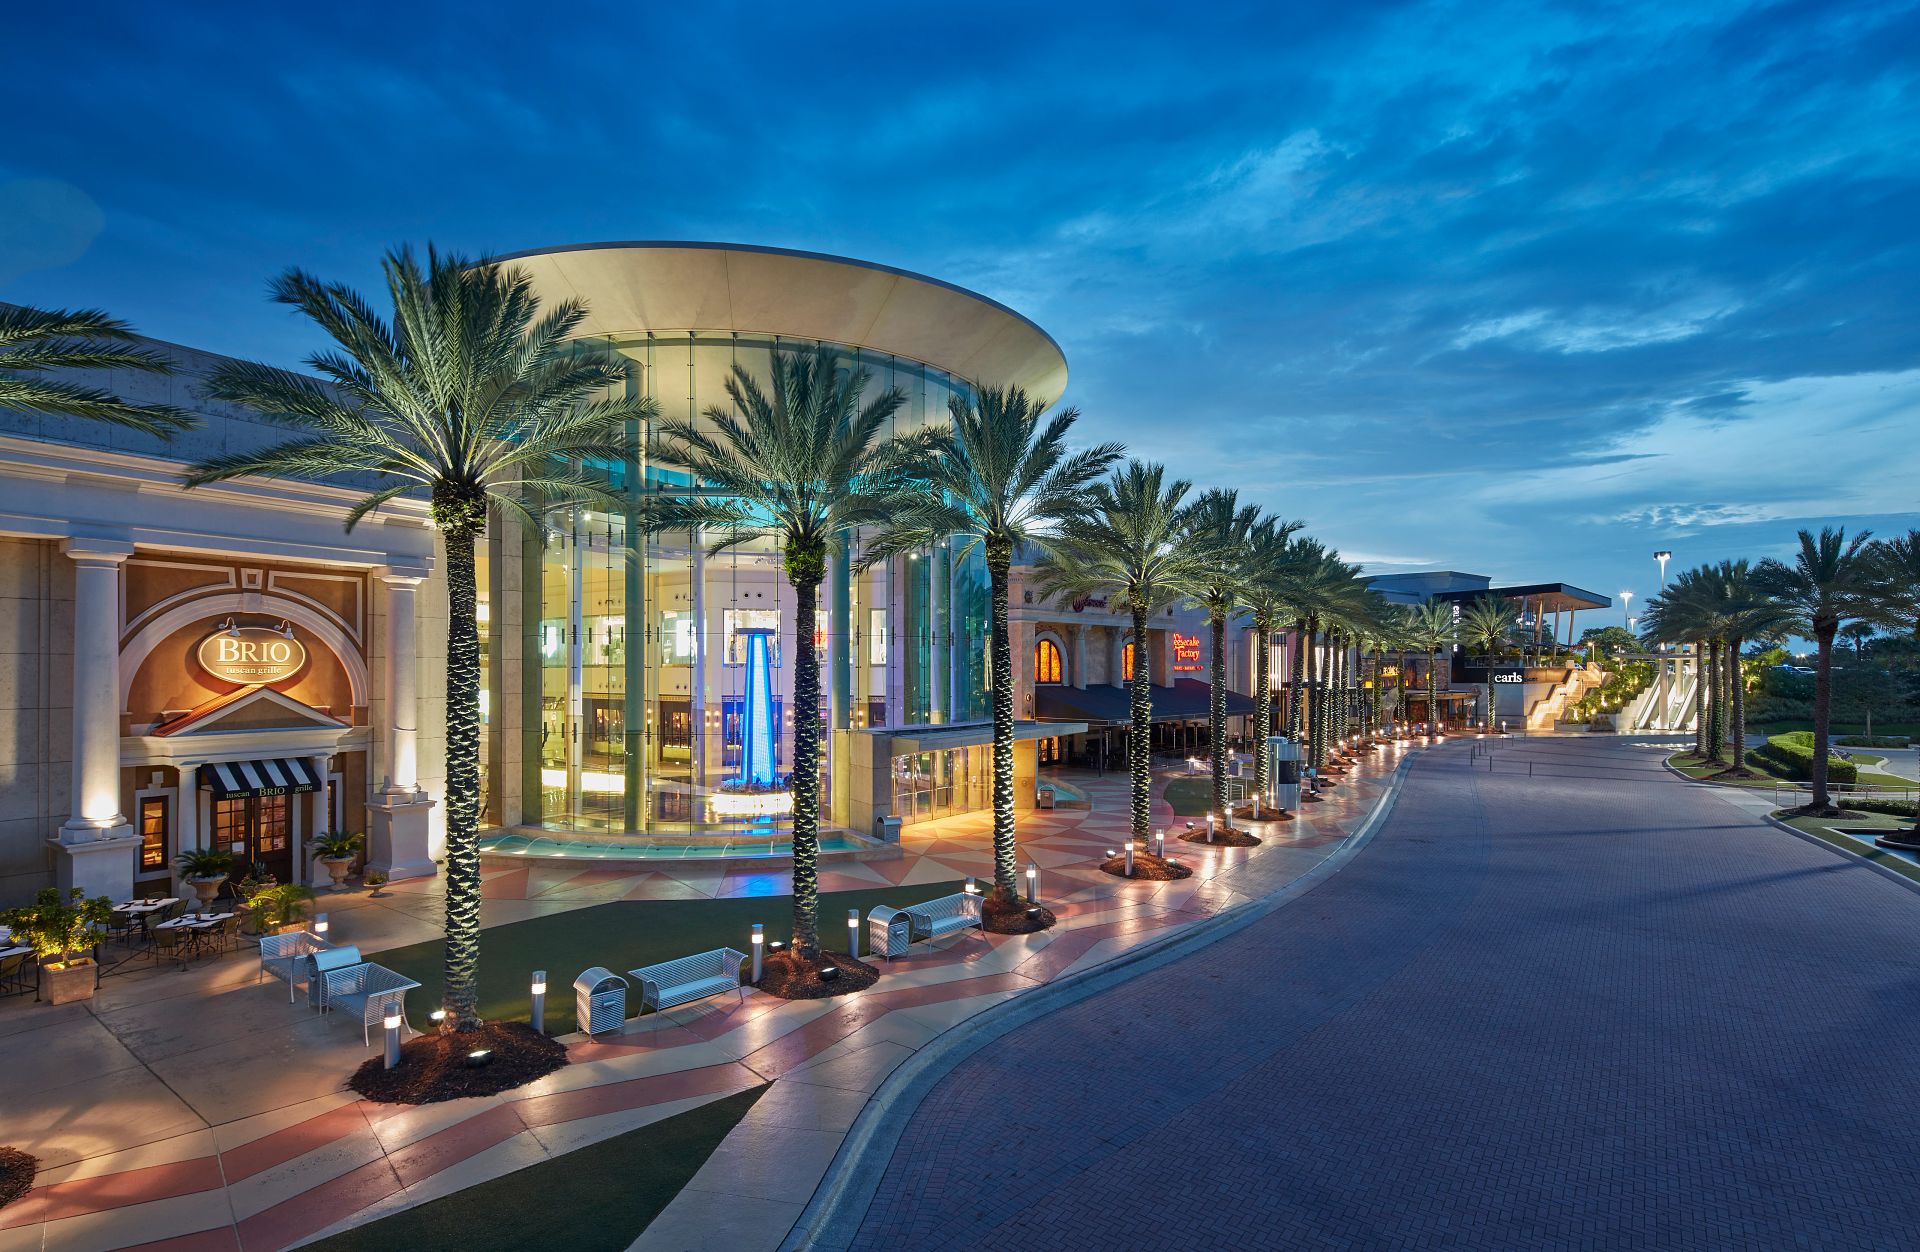 Louis Vuitton Palm Beach Gardens store, United States